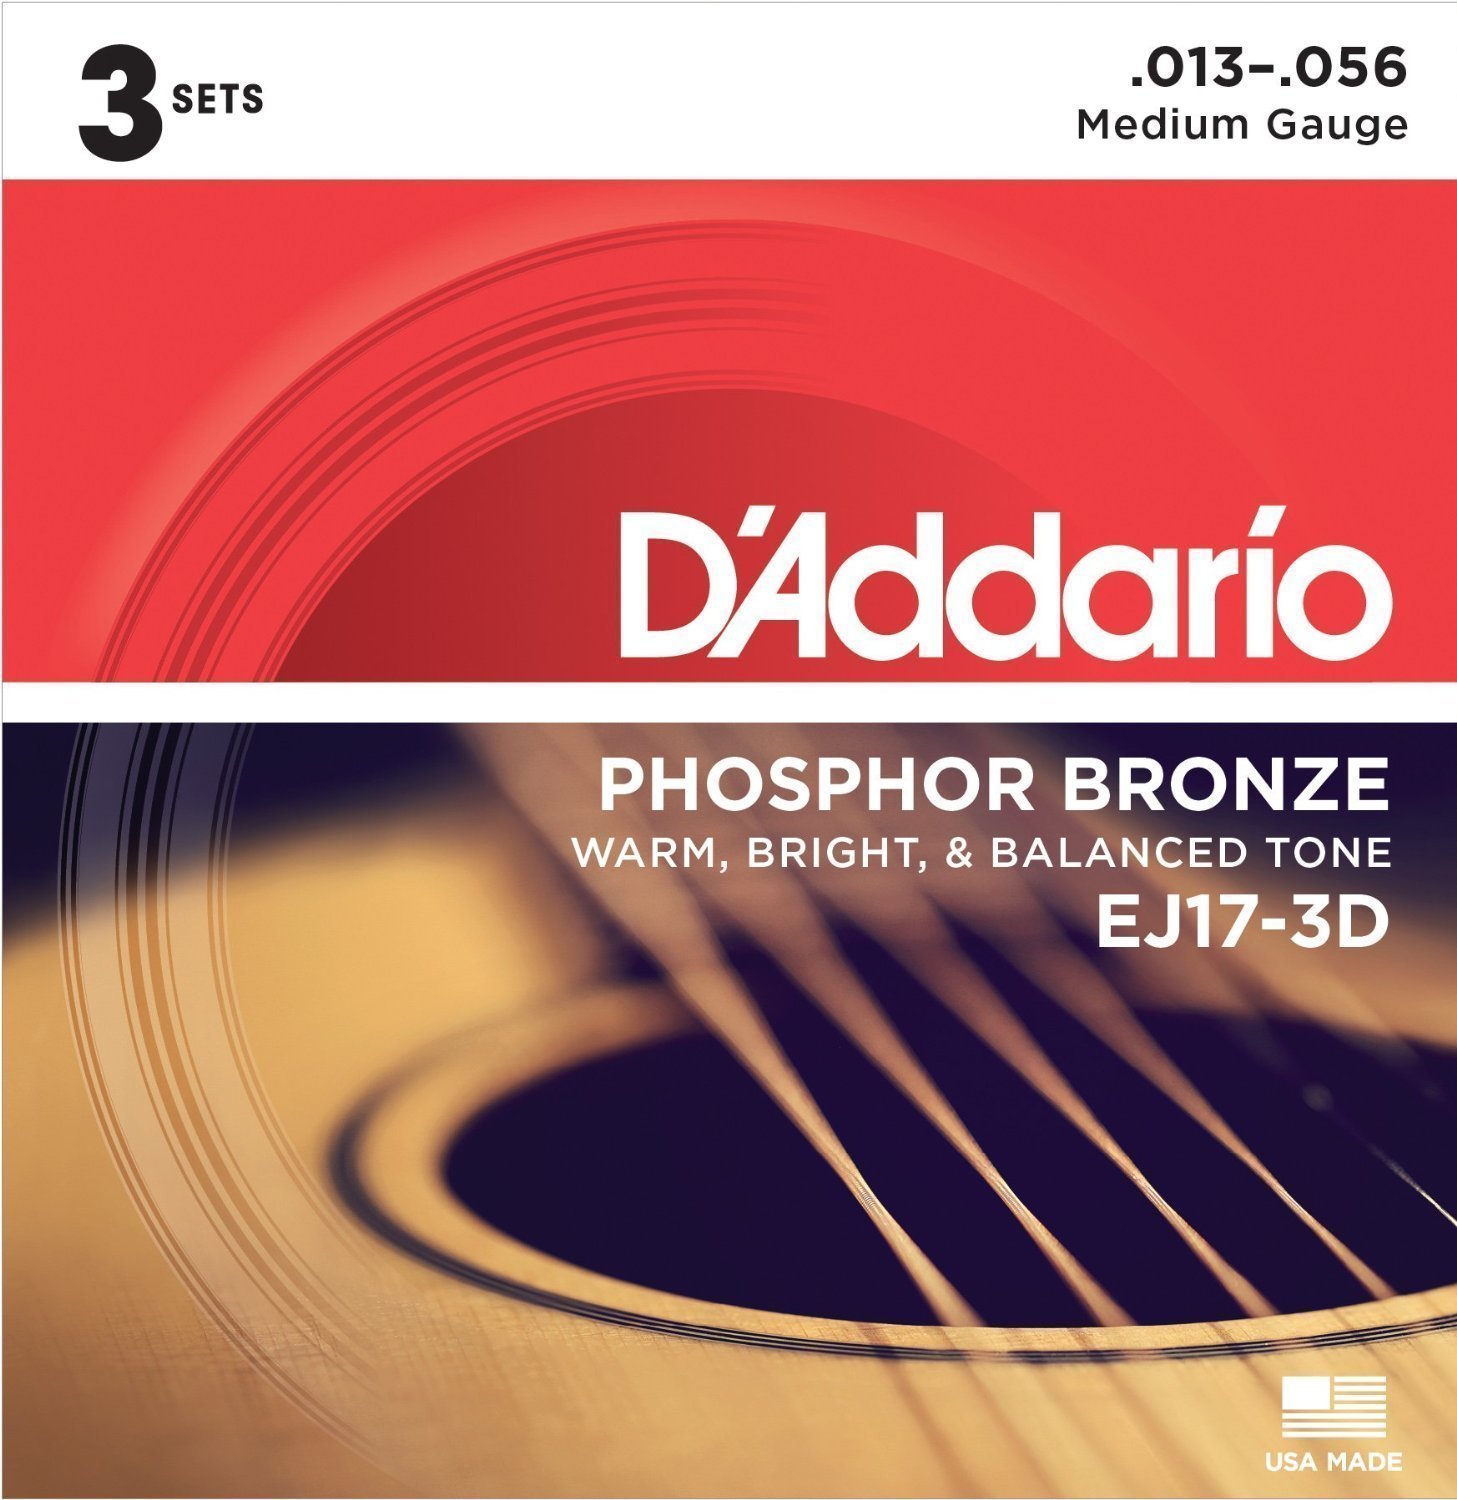 Guitar strings D'Addario EJ17-3D